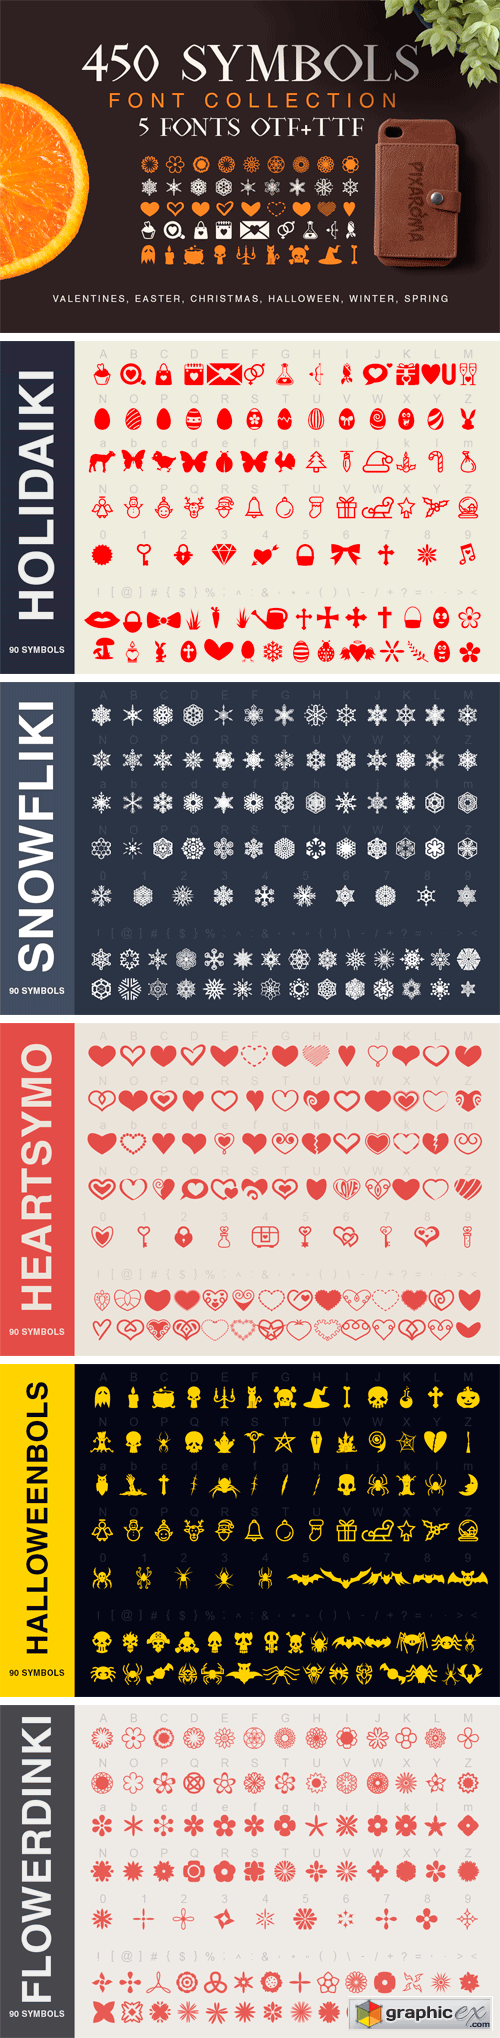 Fontbundles - Symbols Font Collection - 450 Elements